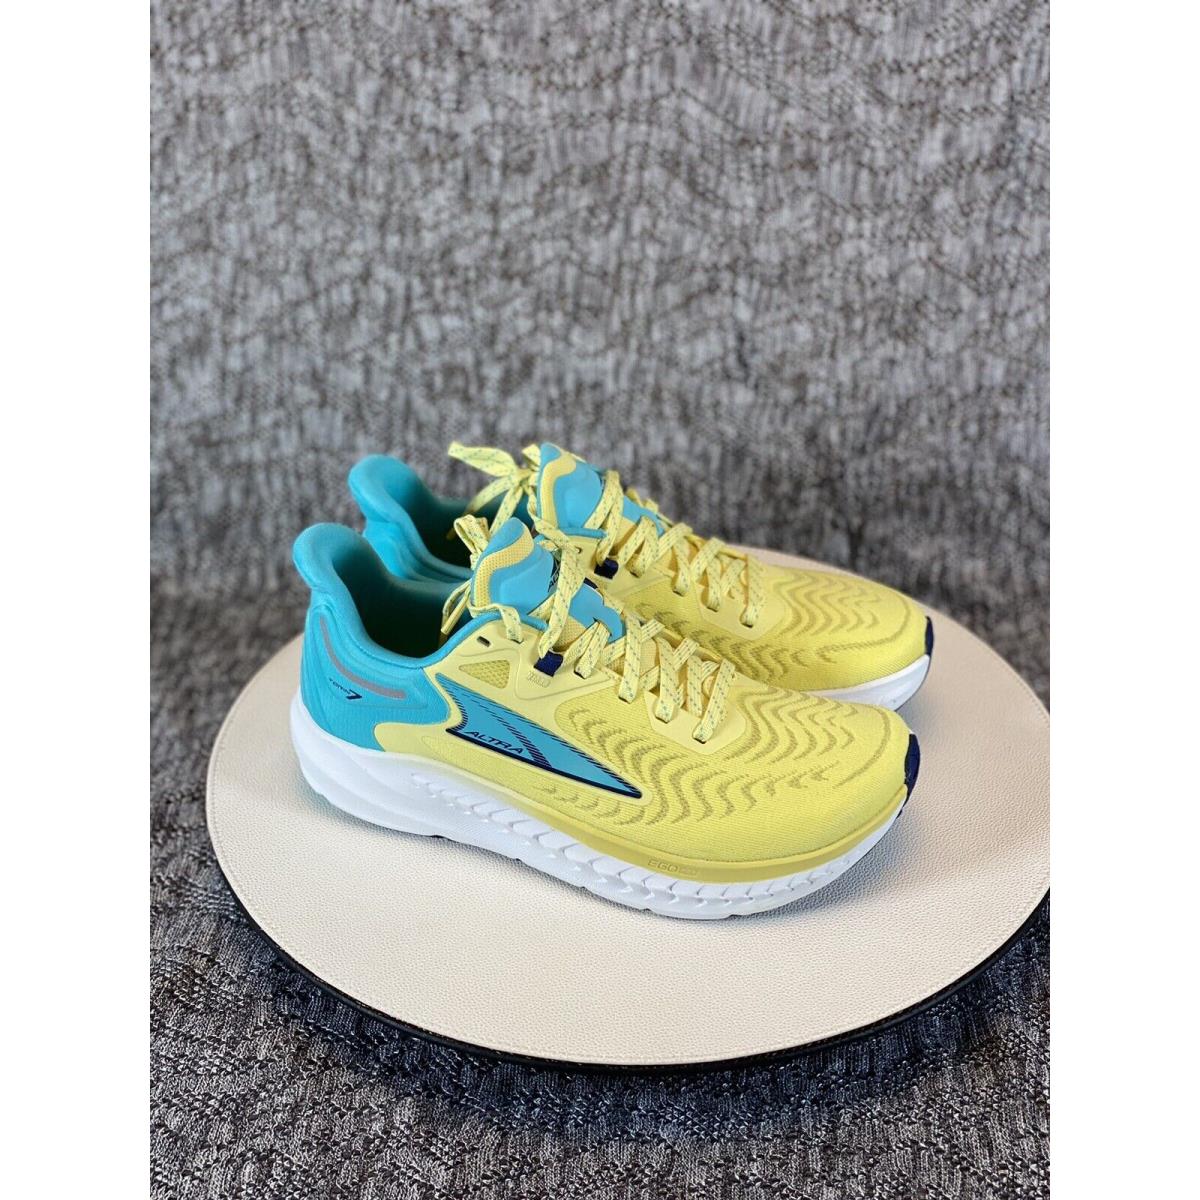 Altra Torin 7 Running Shoes Women`s Size 8 Yellow